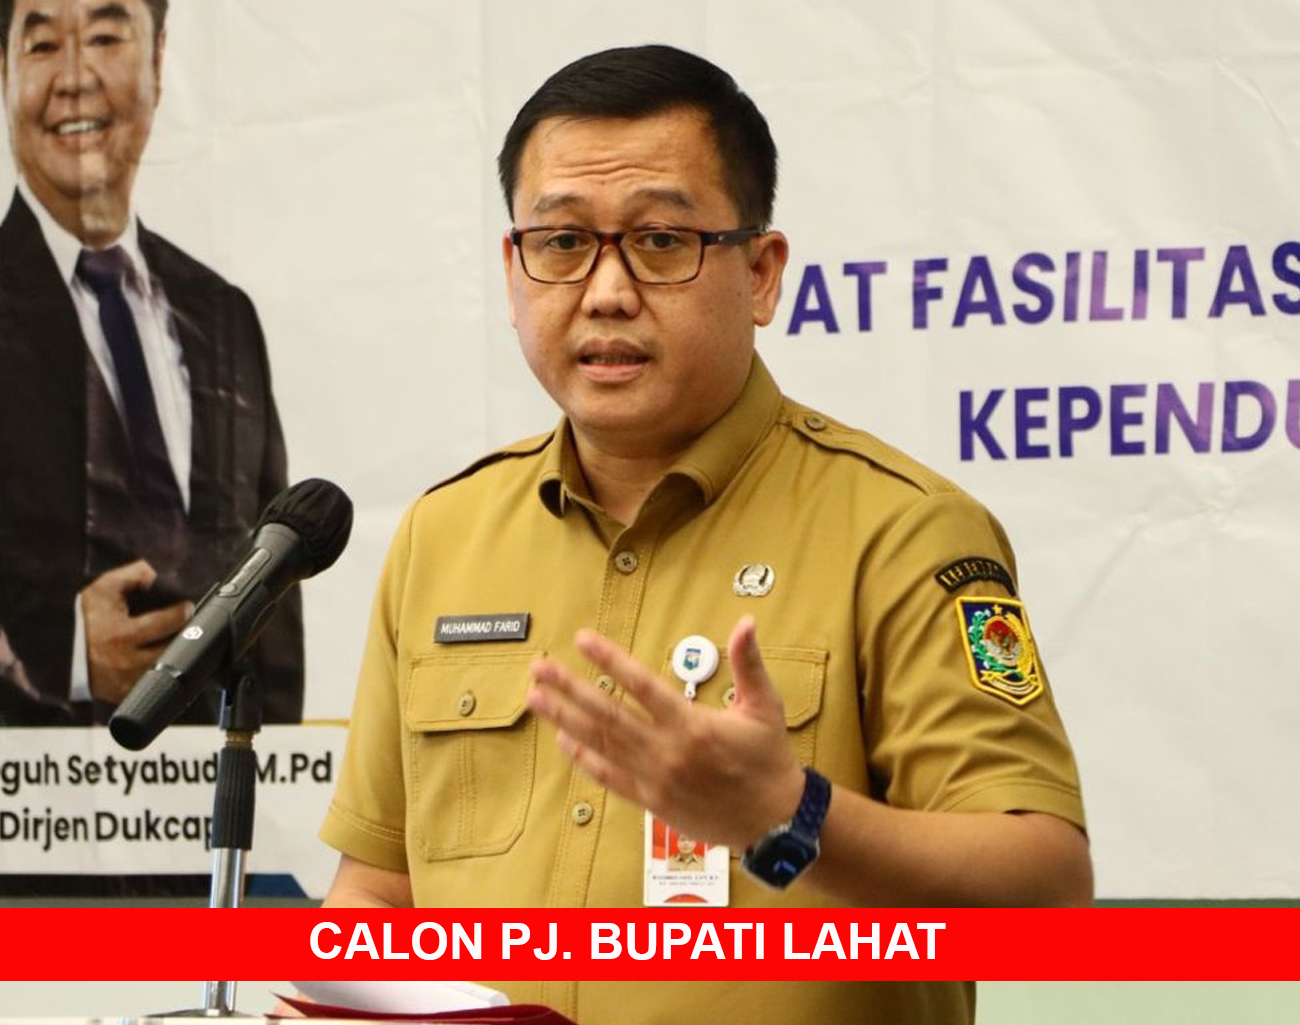 Muhammad Farid Calon Pj Bupati Lahat dari Kemendagri Pimpinan Tito Karnavian